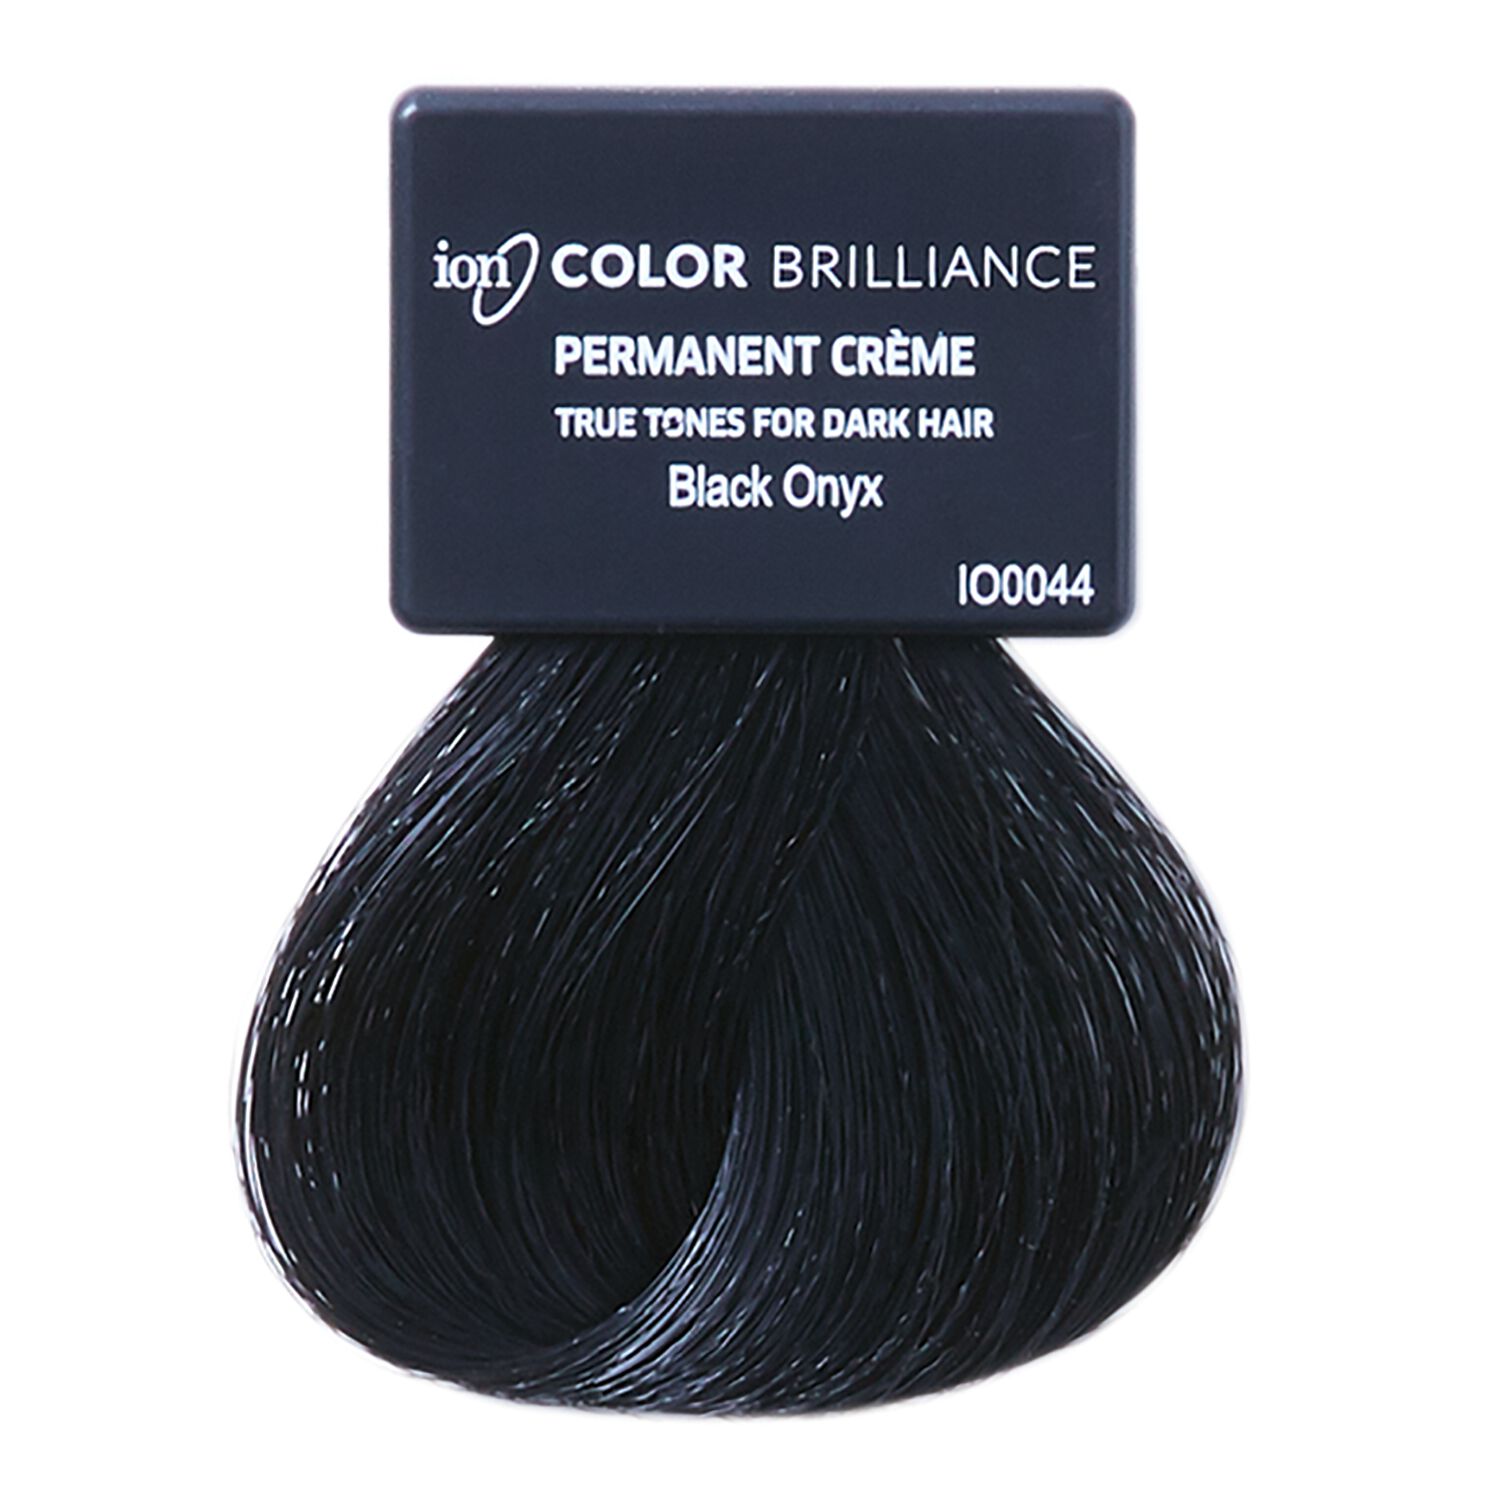 Ion True Tones for Dark Hair Permanent Crème Hair Color Black Onyx